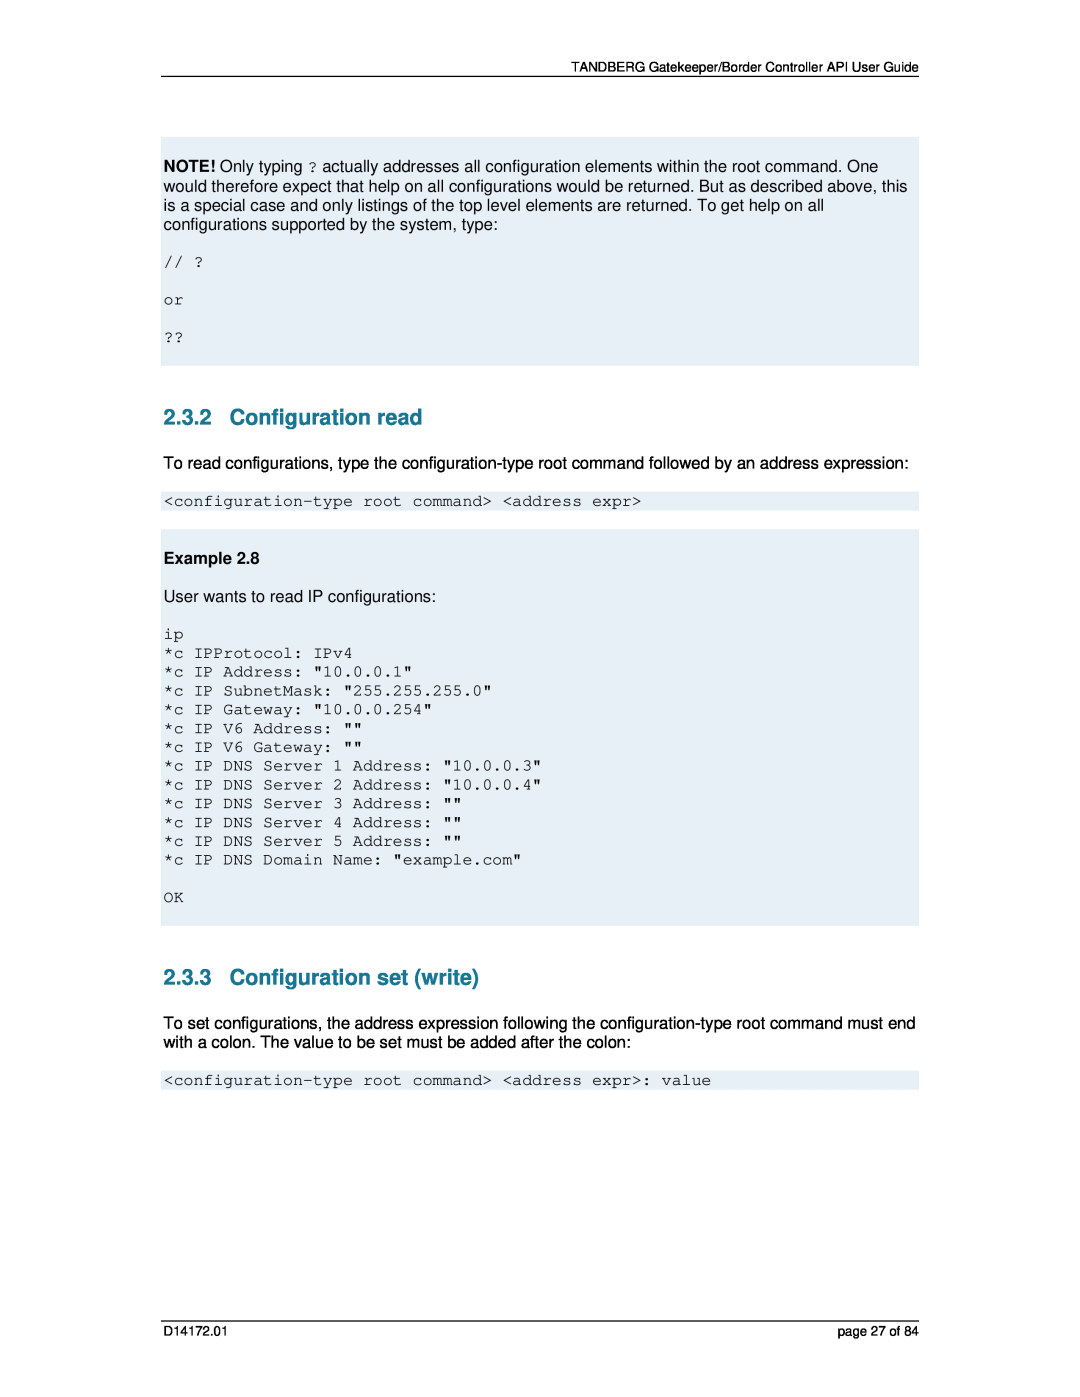 TANDBERG D14172.01 manual Configuration read, Configuration set write, Example 